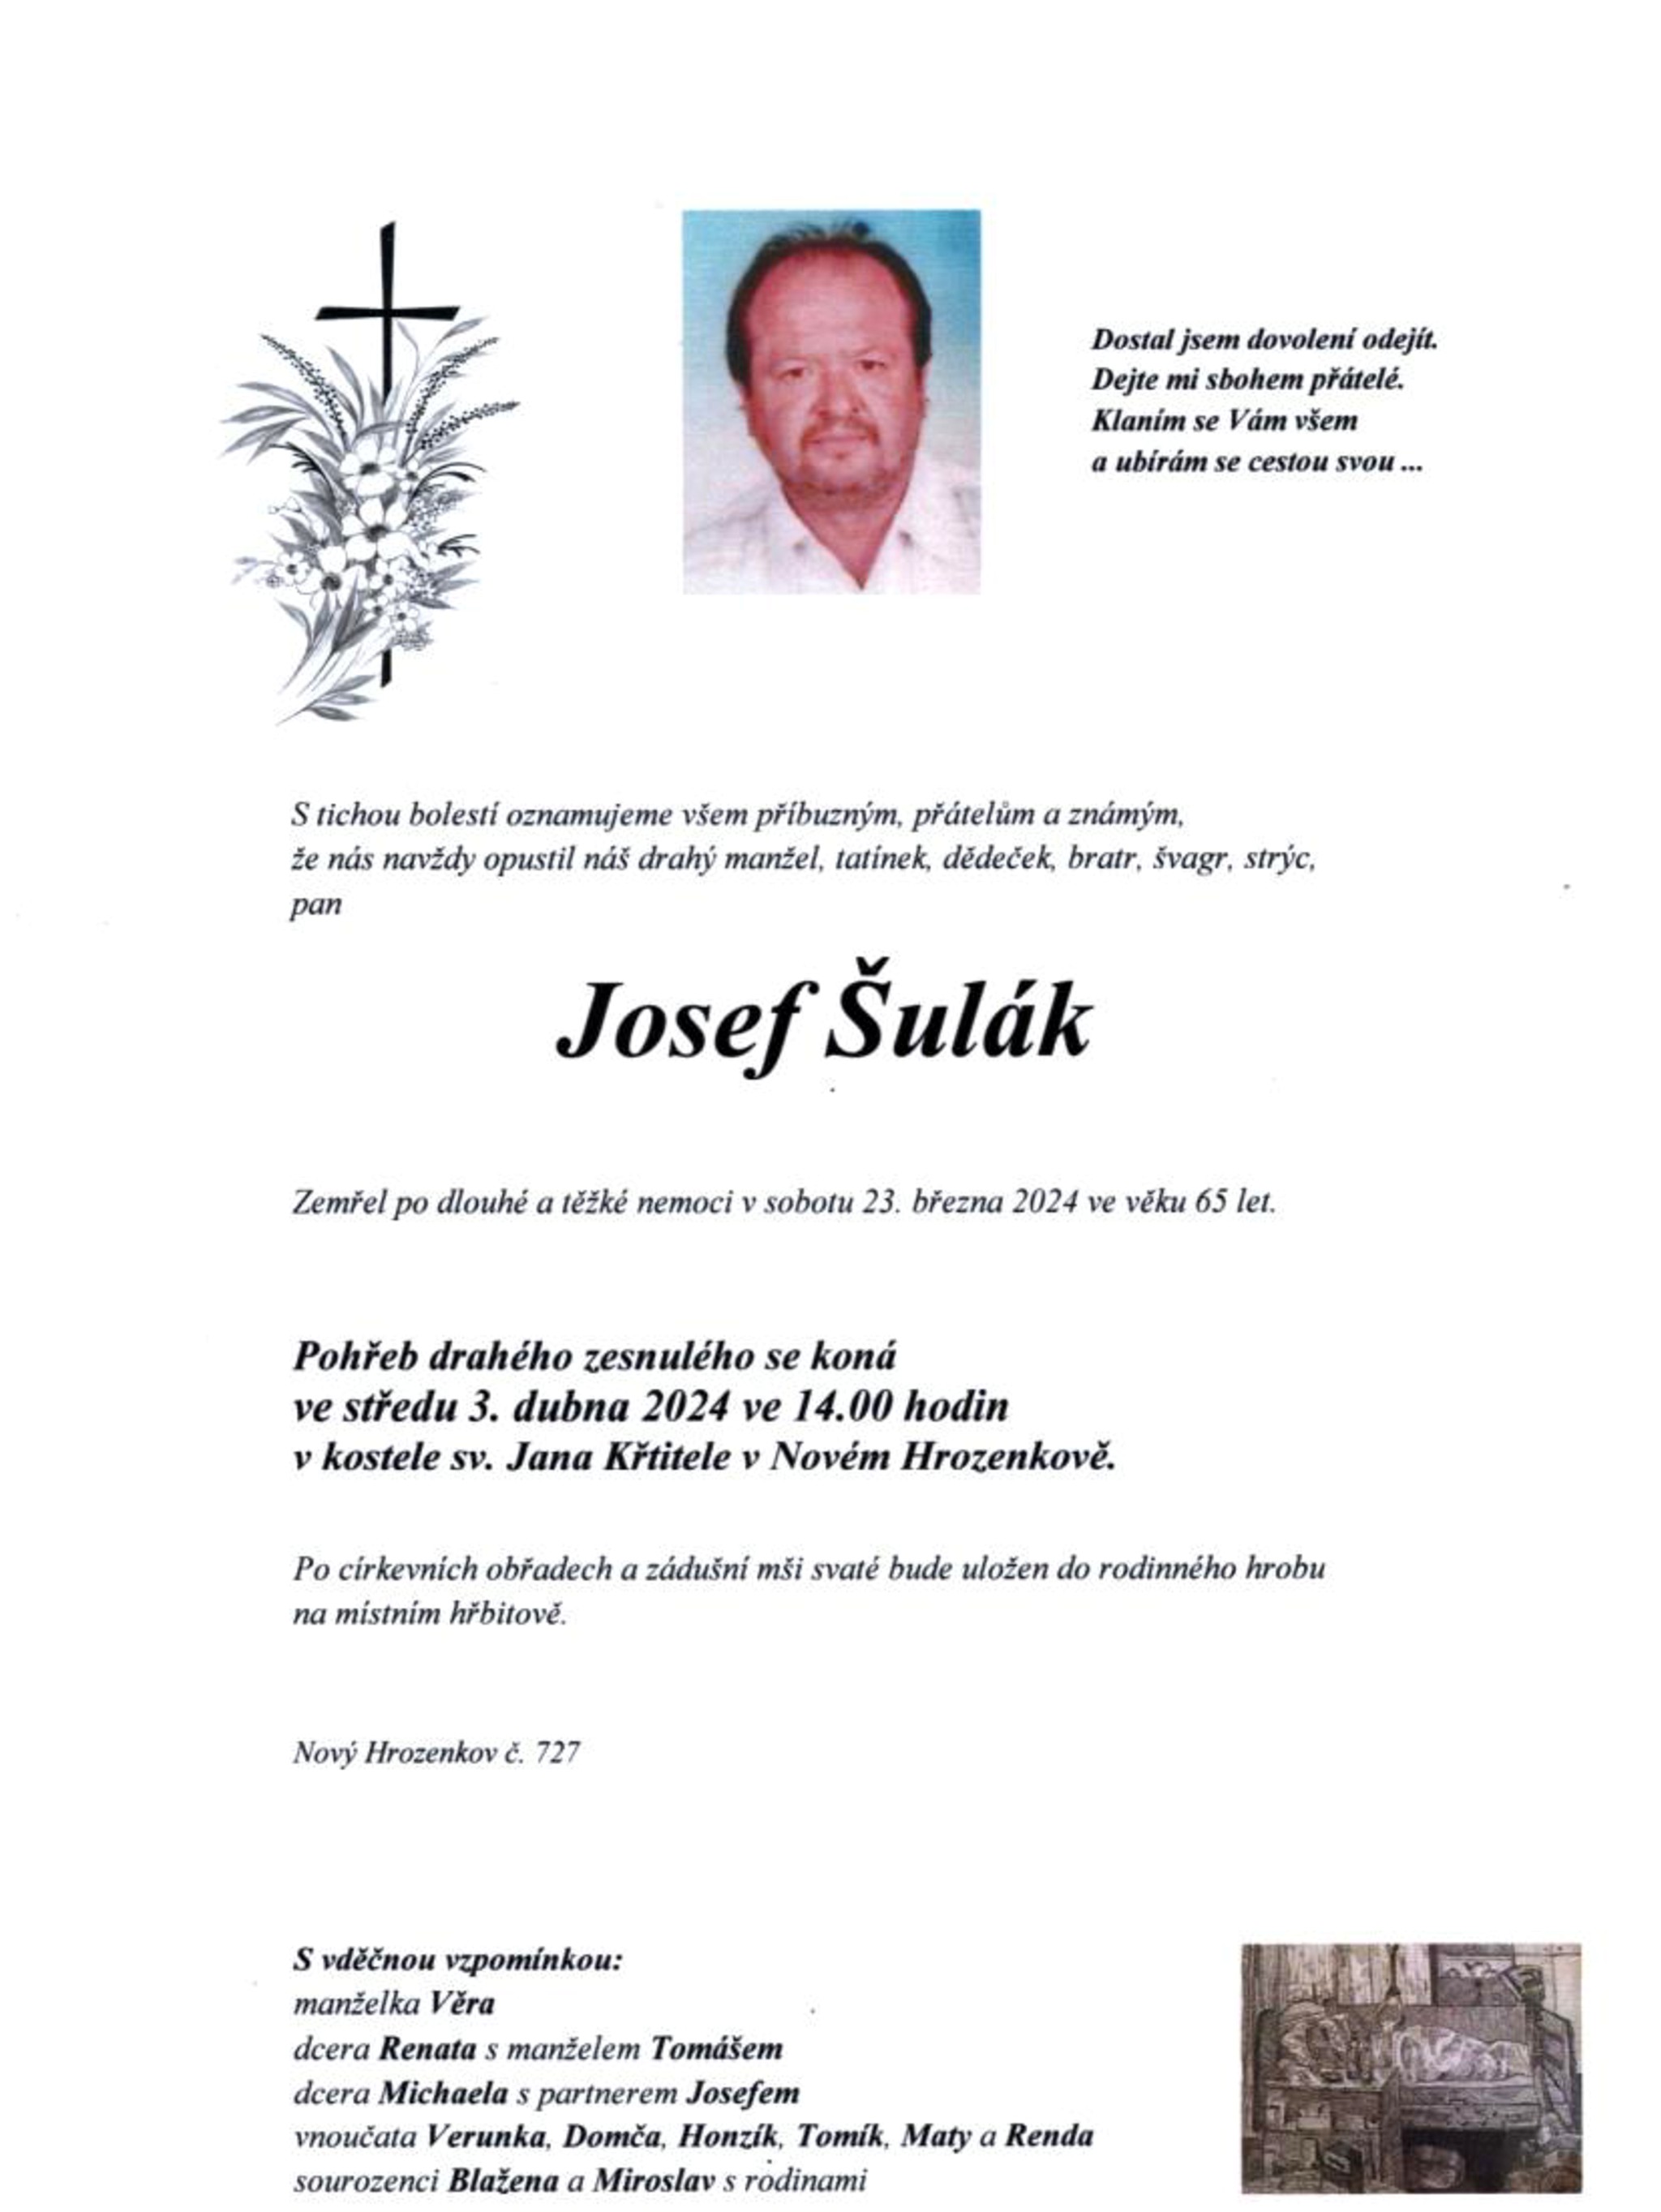 Josef Šulák